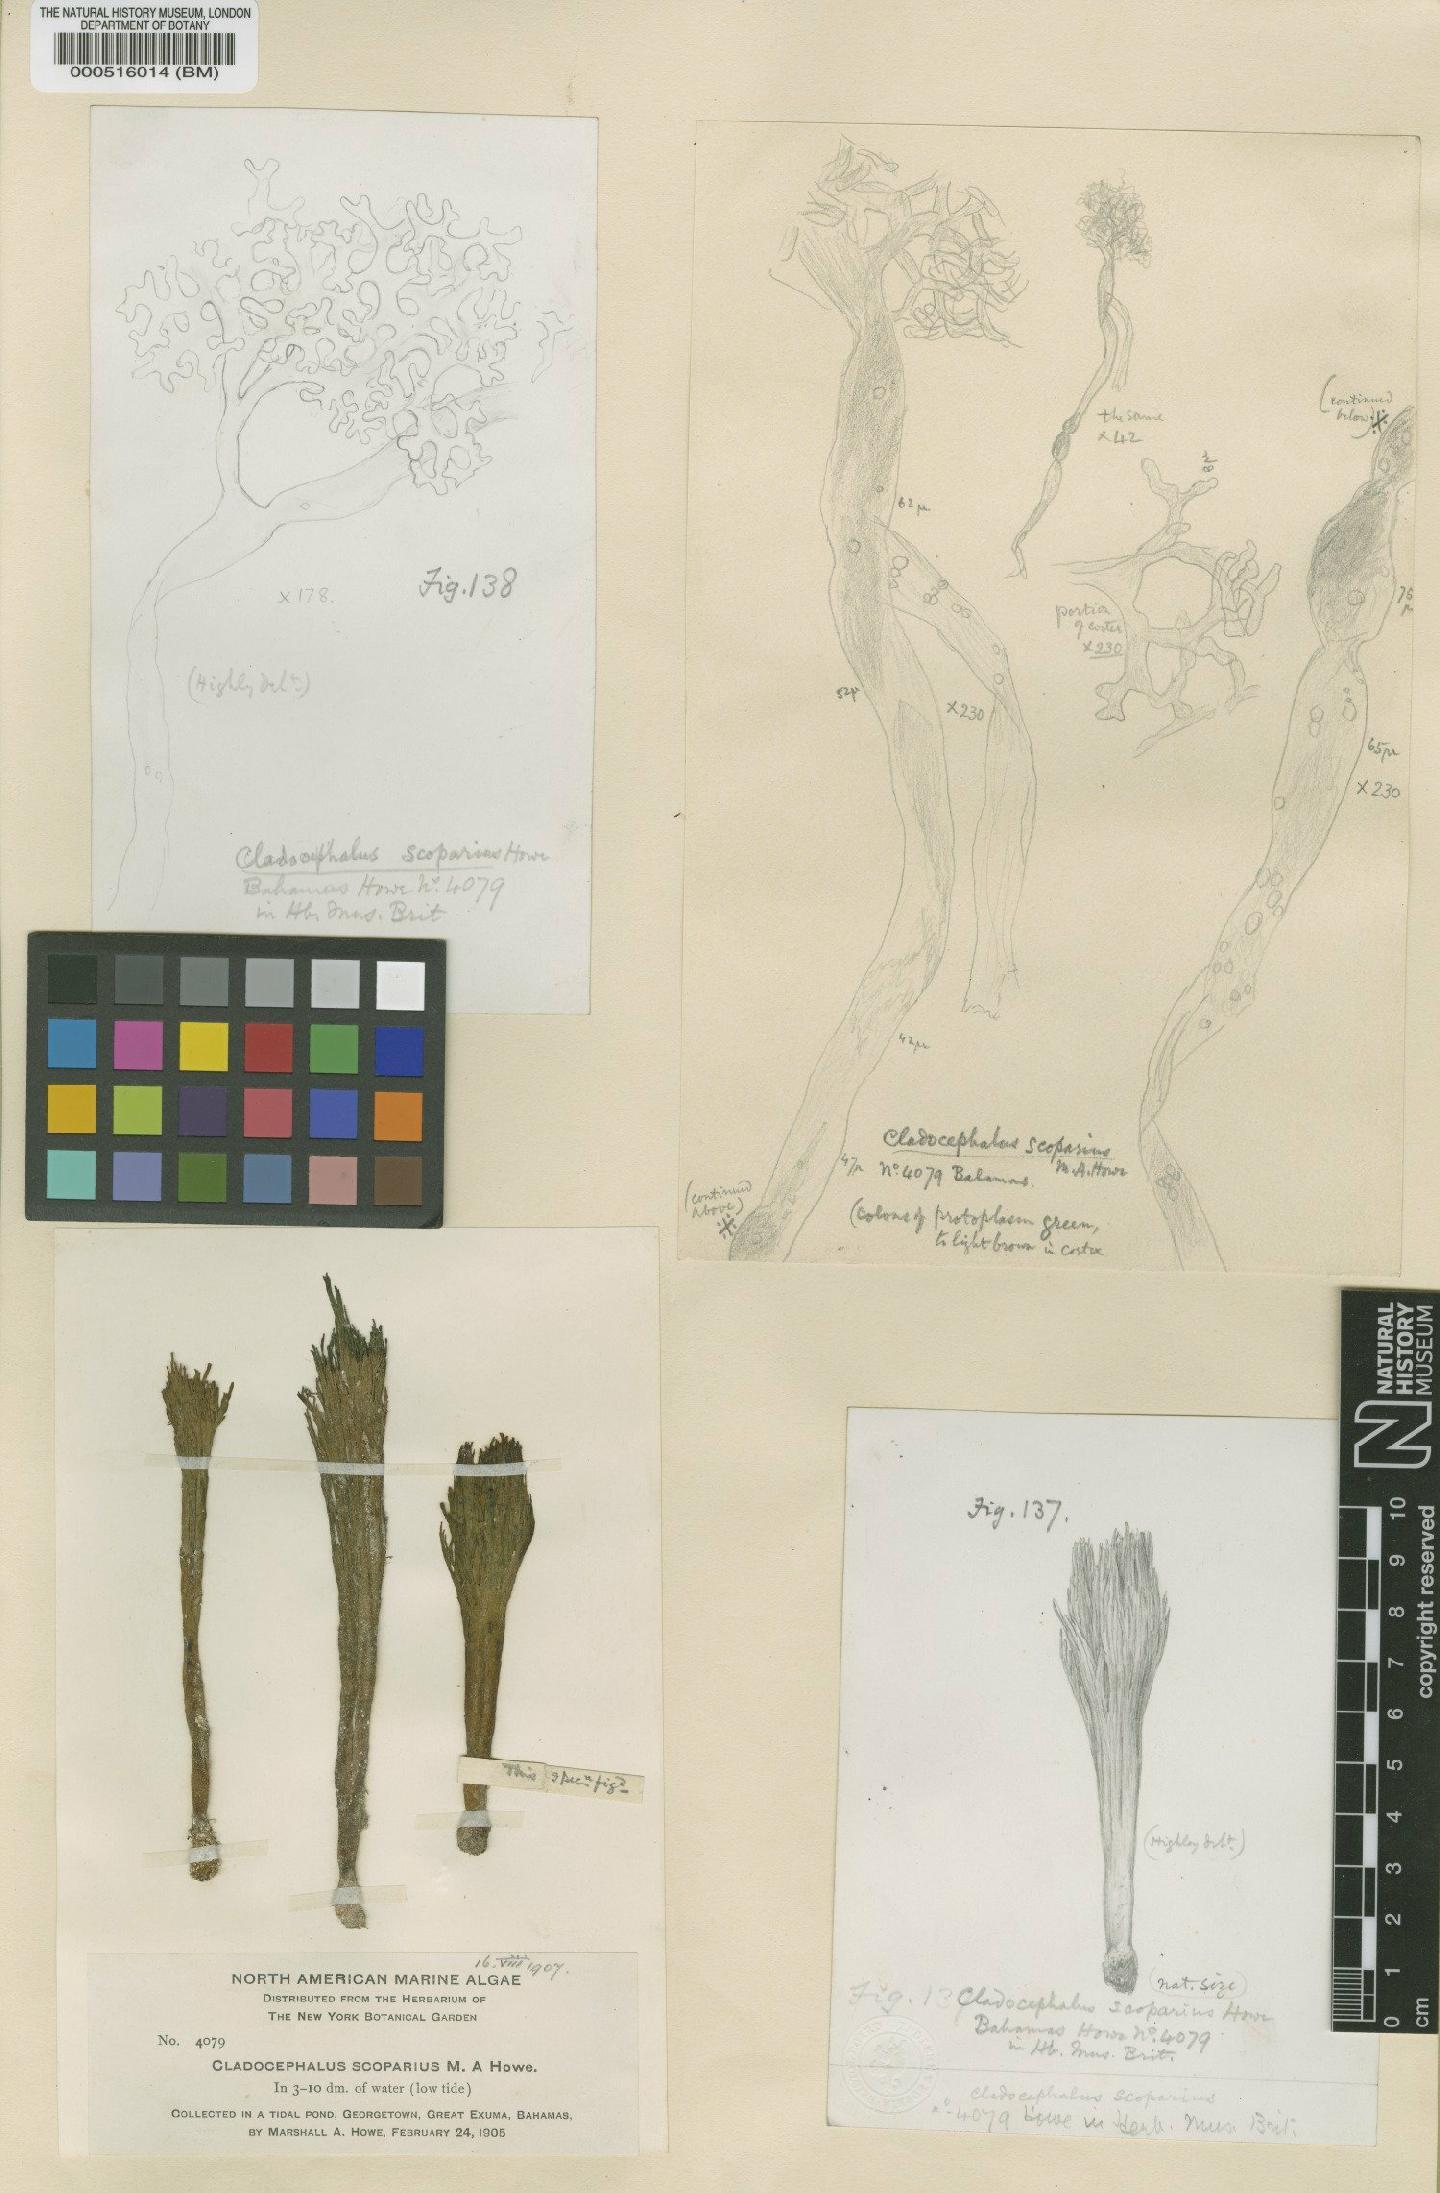 To NHMUK collection (Cladocephalus scoparius (M.Howe) M.Howe; Type; NHMUK:ecatalogue:4830083)